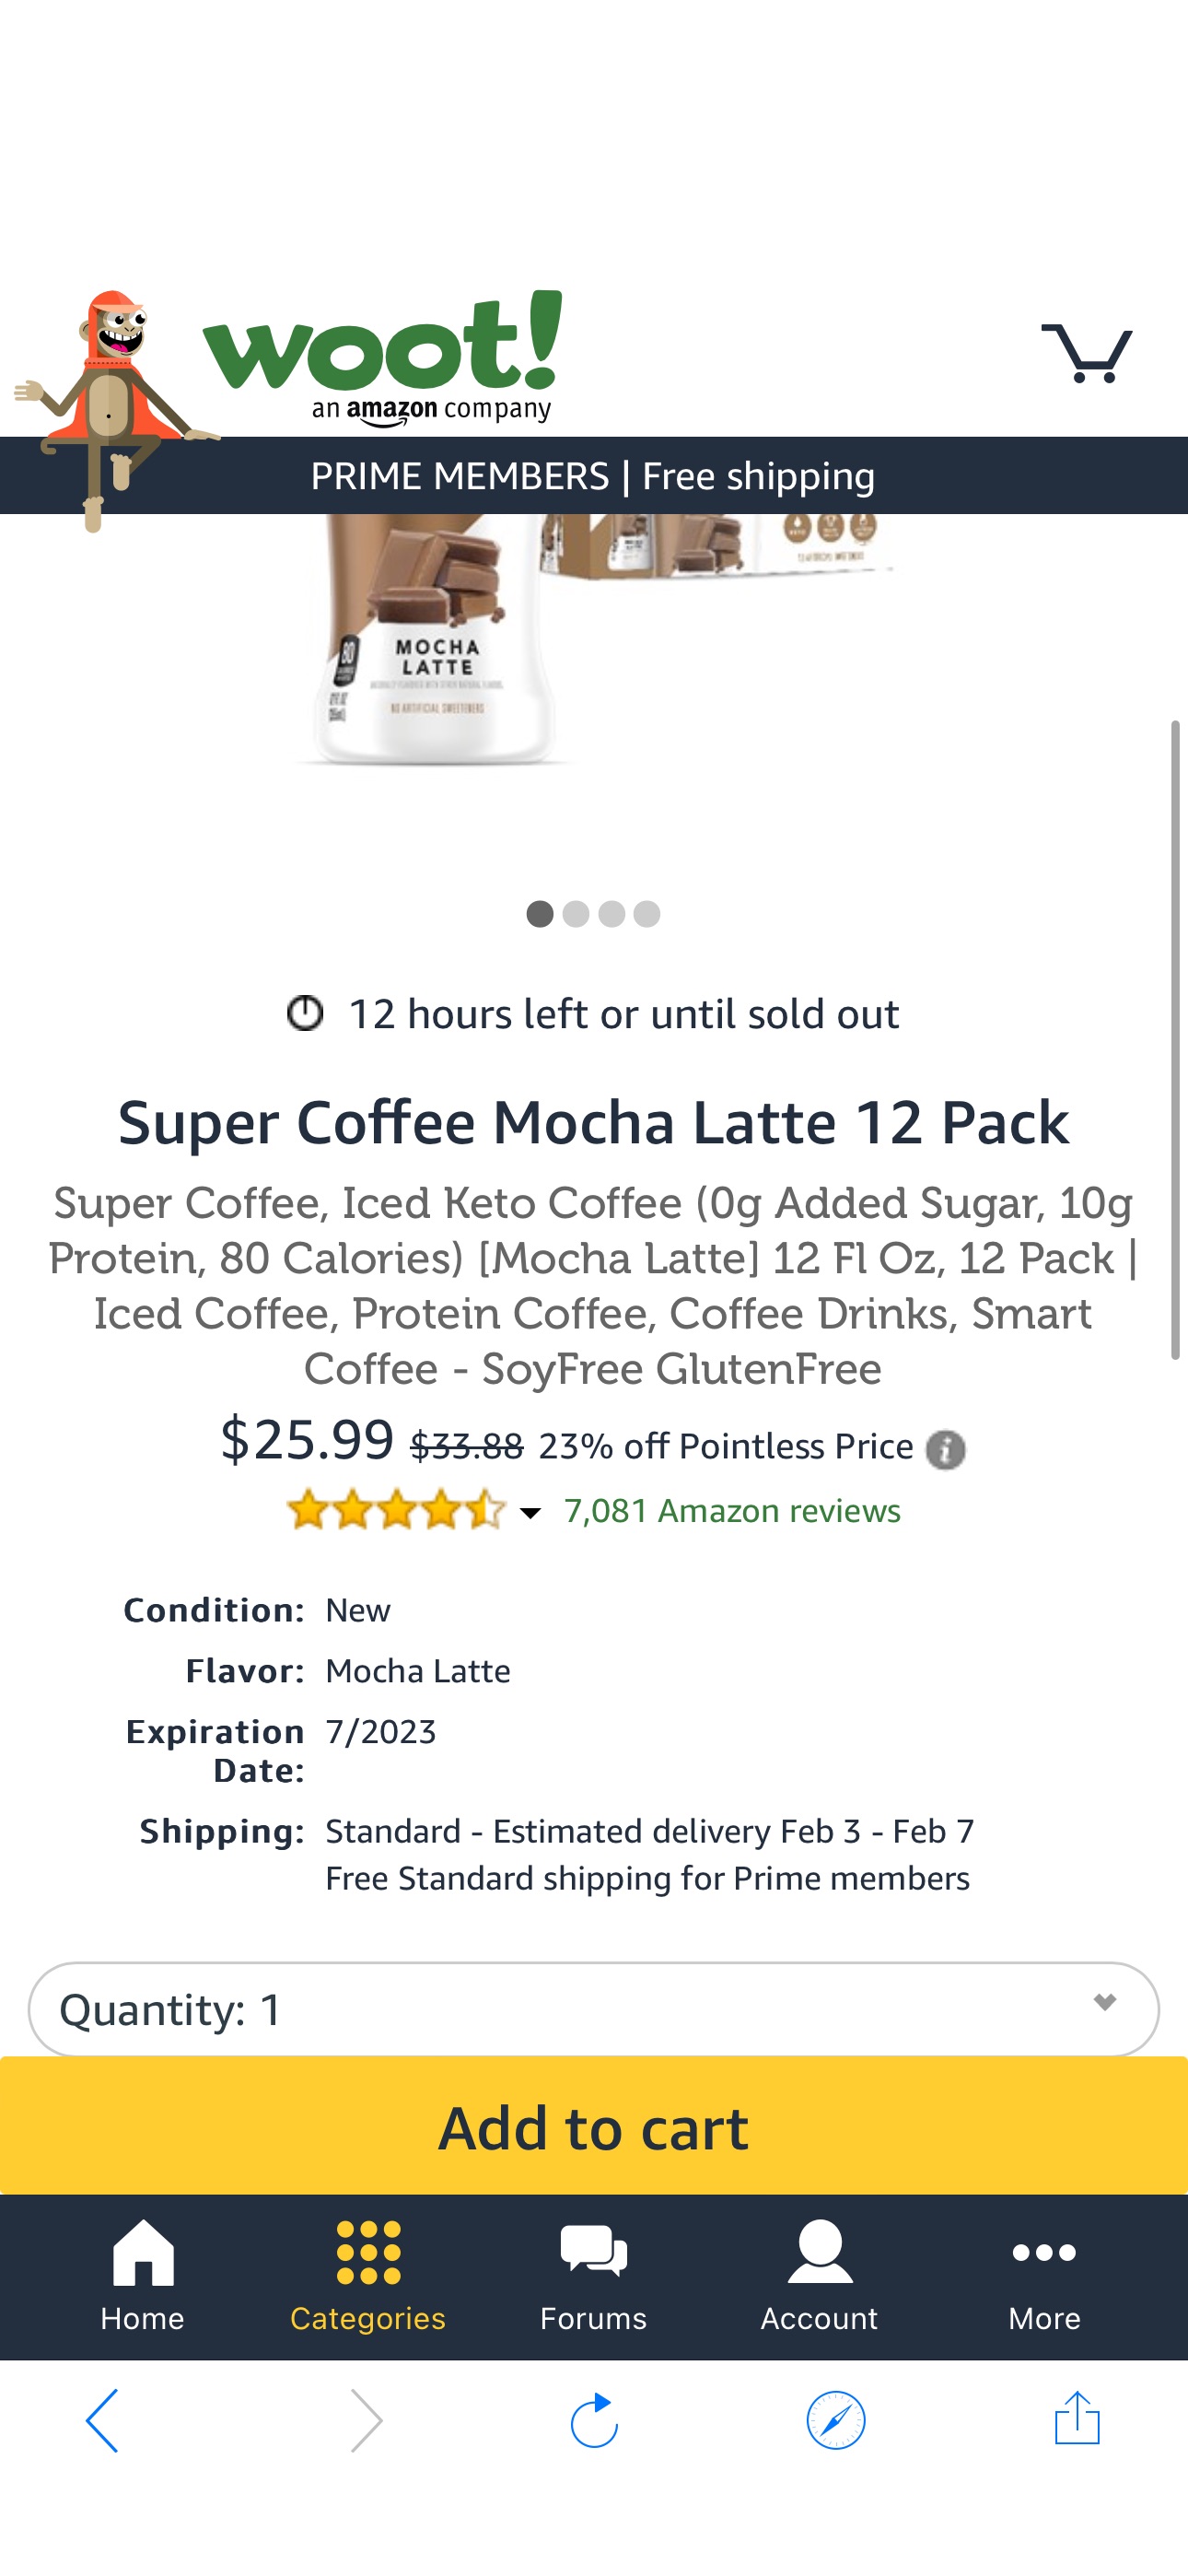 Super Coffee Mocha Latte 12 Pack